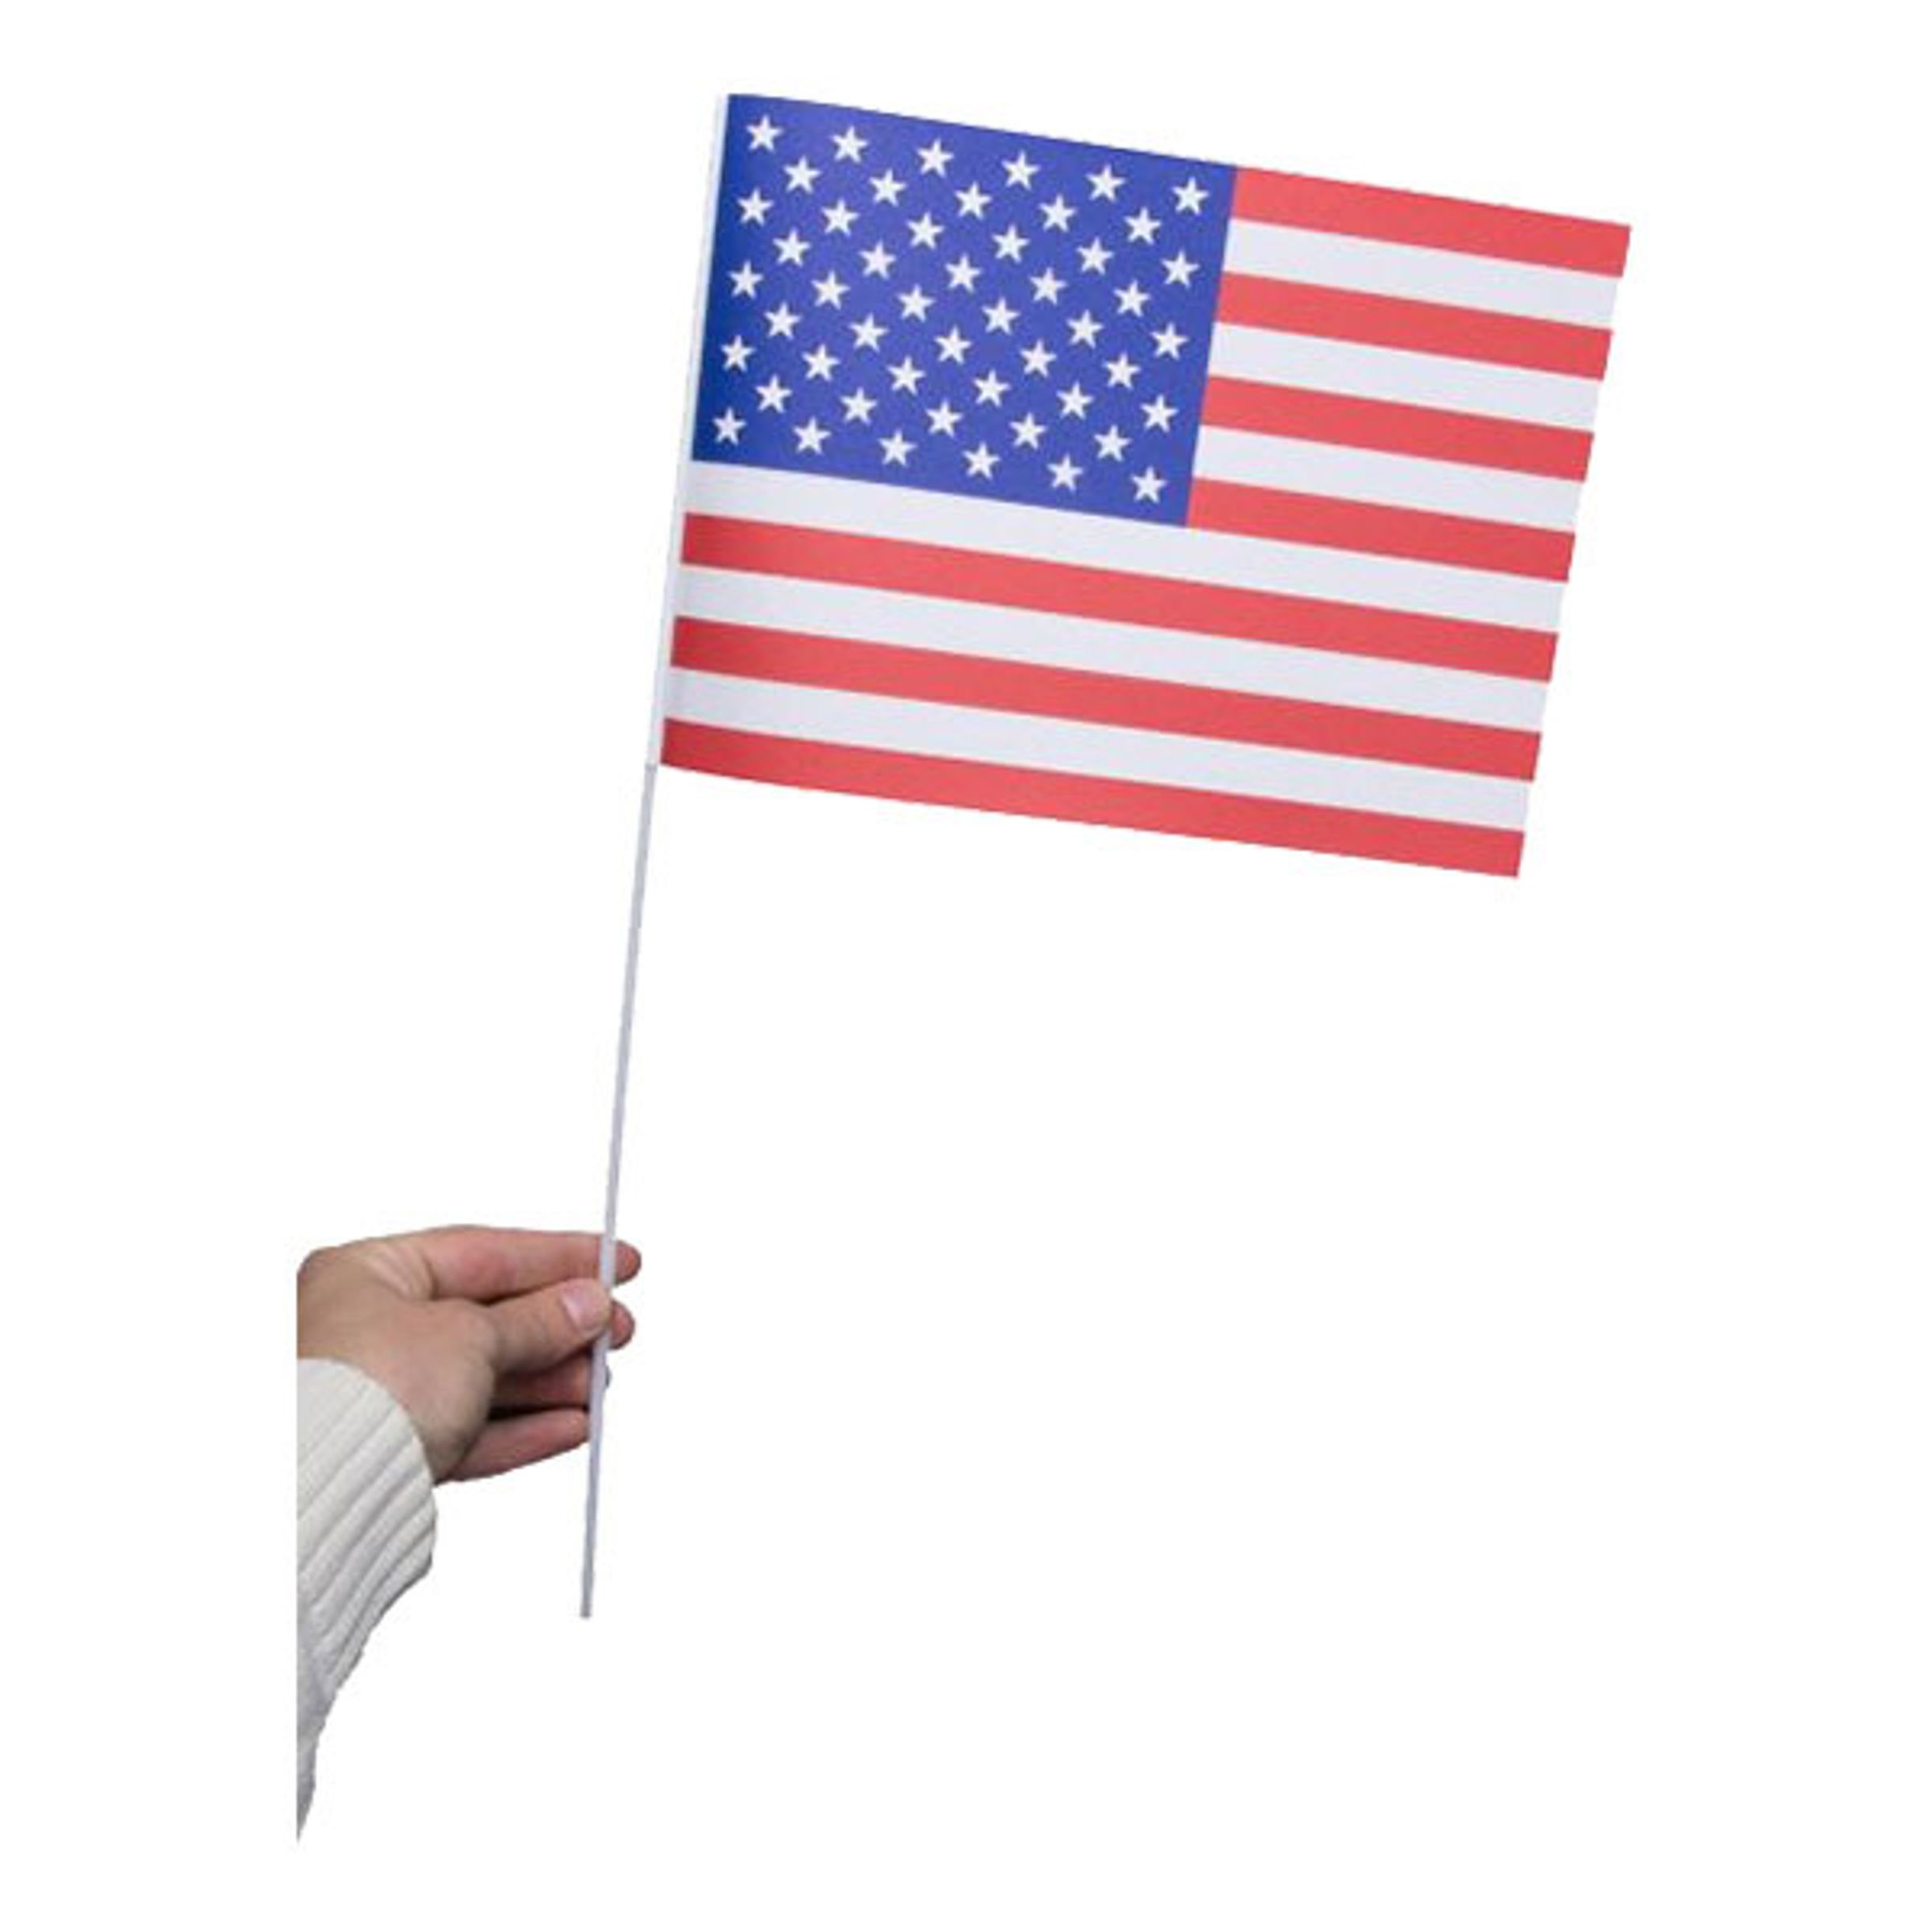 Pappersflagga USA - 1-pack